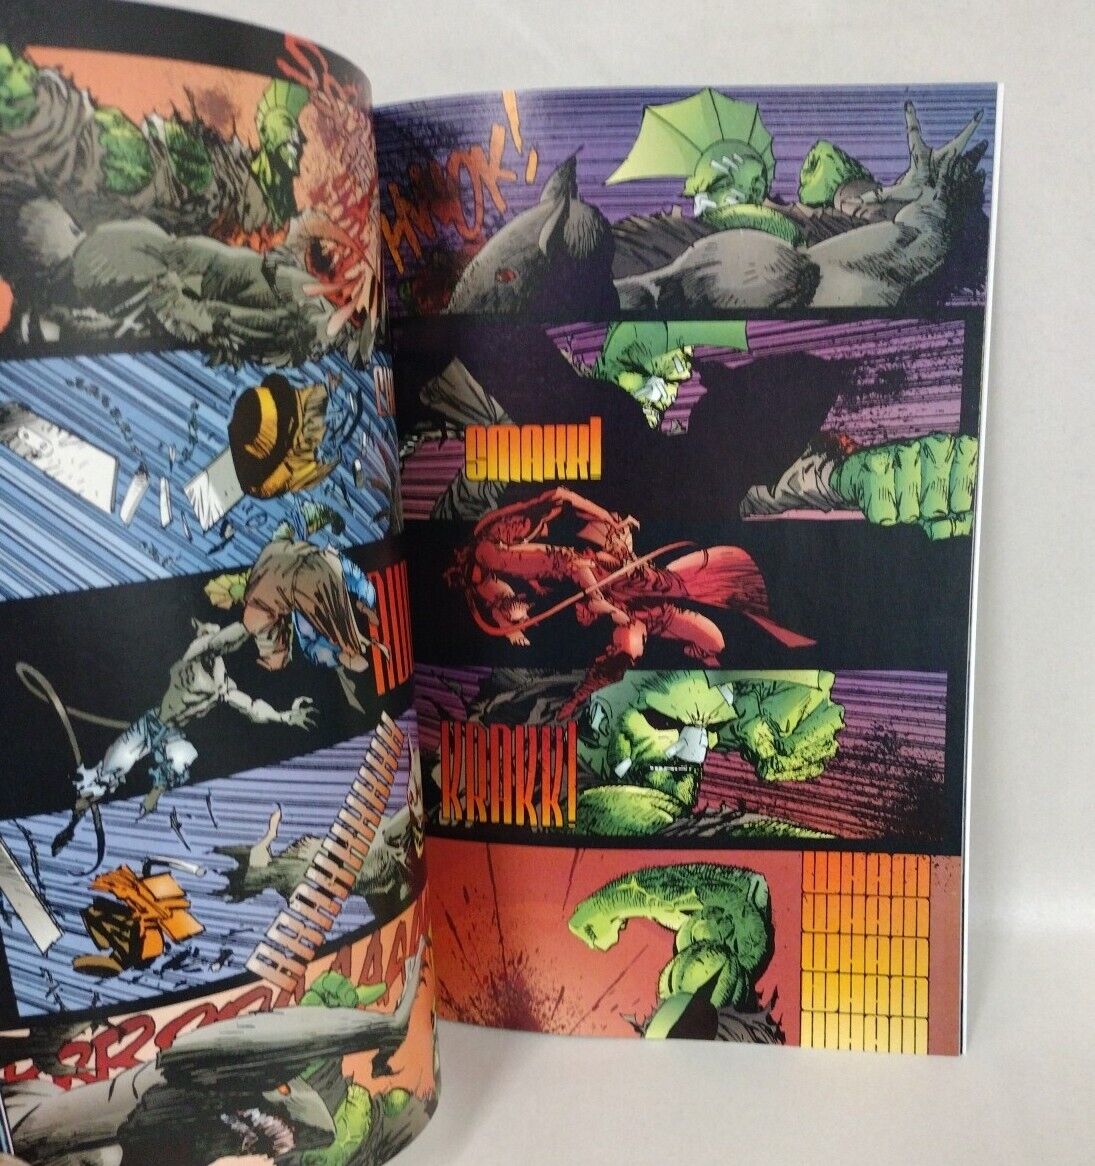 Savage Dragon (1993) Image Comics Ongoing Comic Lot Set #1-11 + Vs Megaton Man